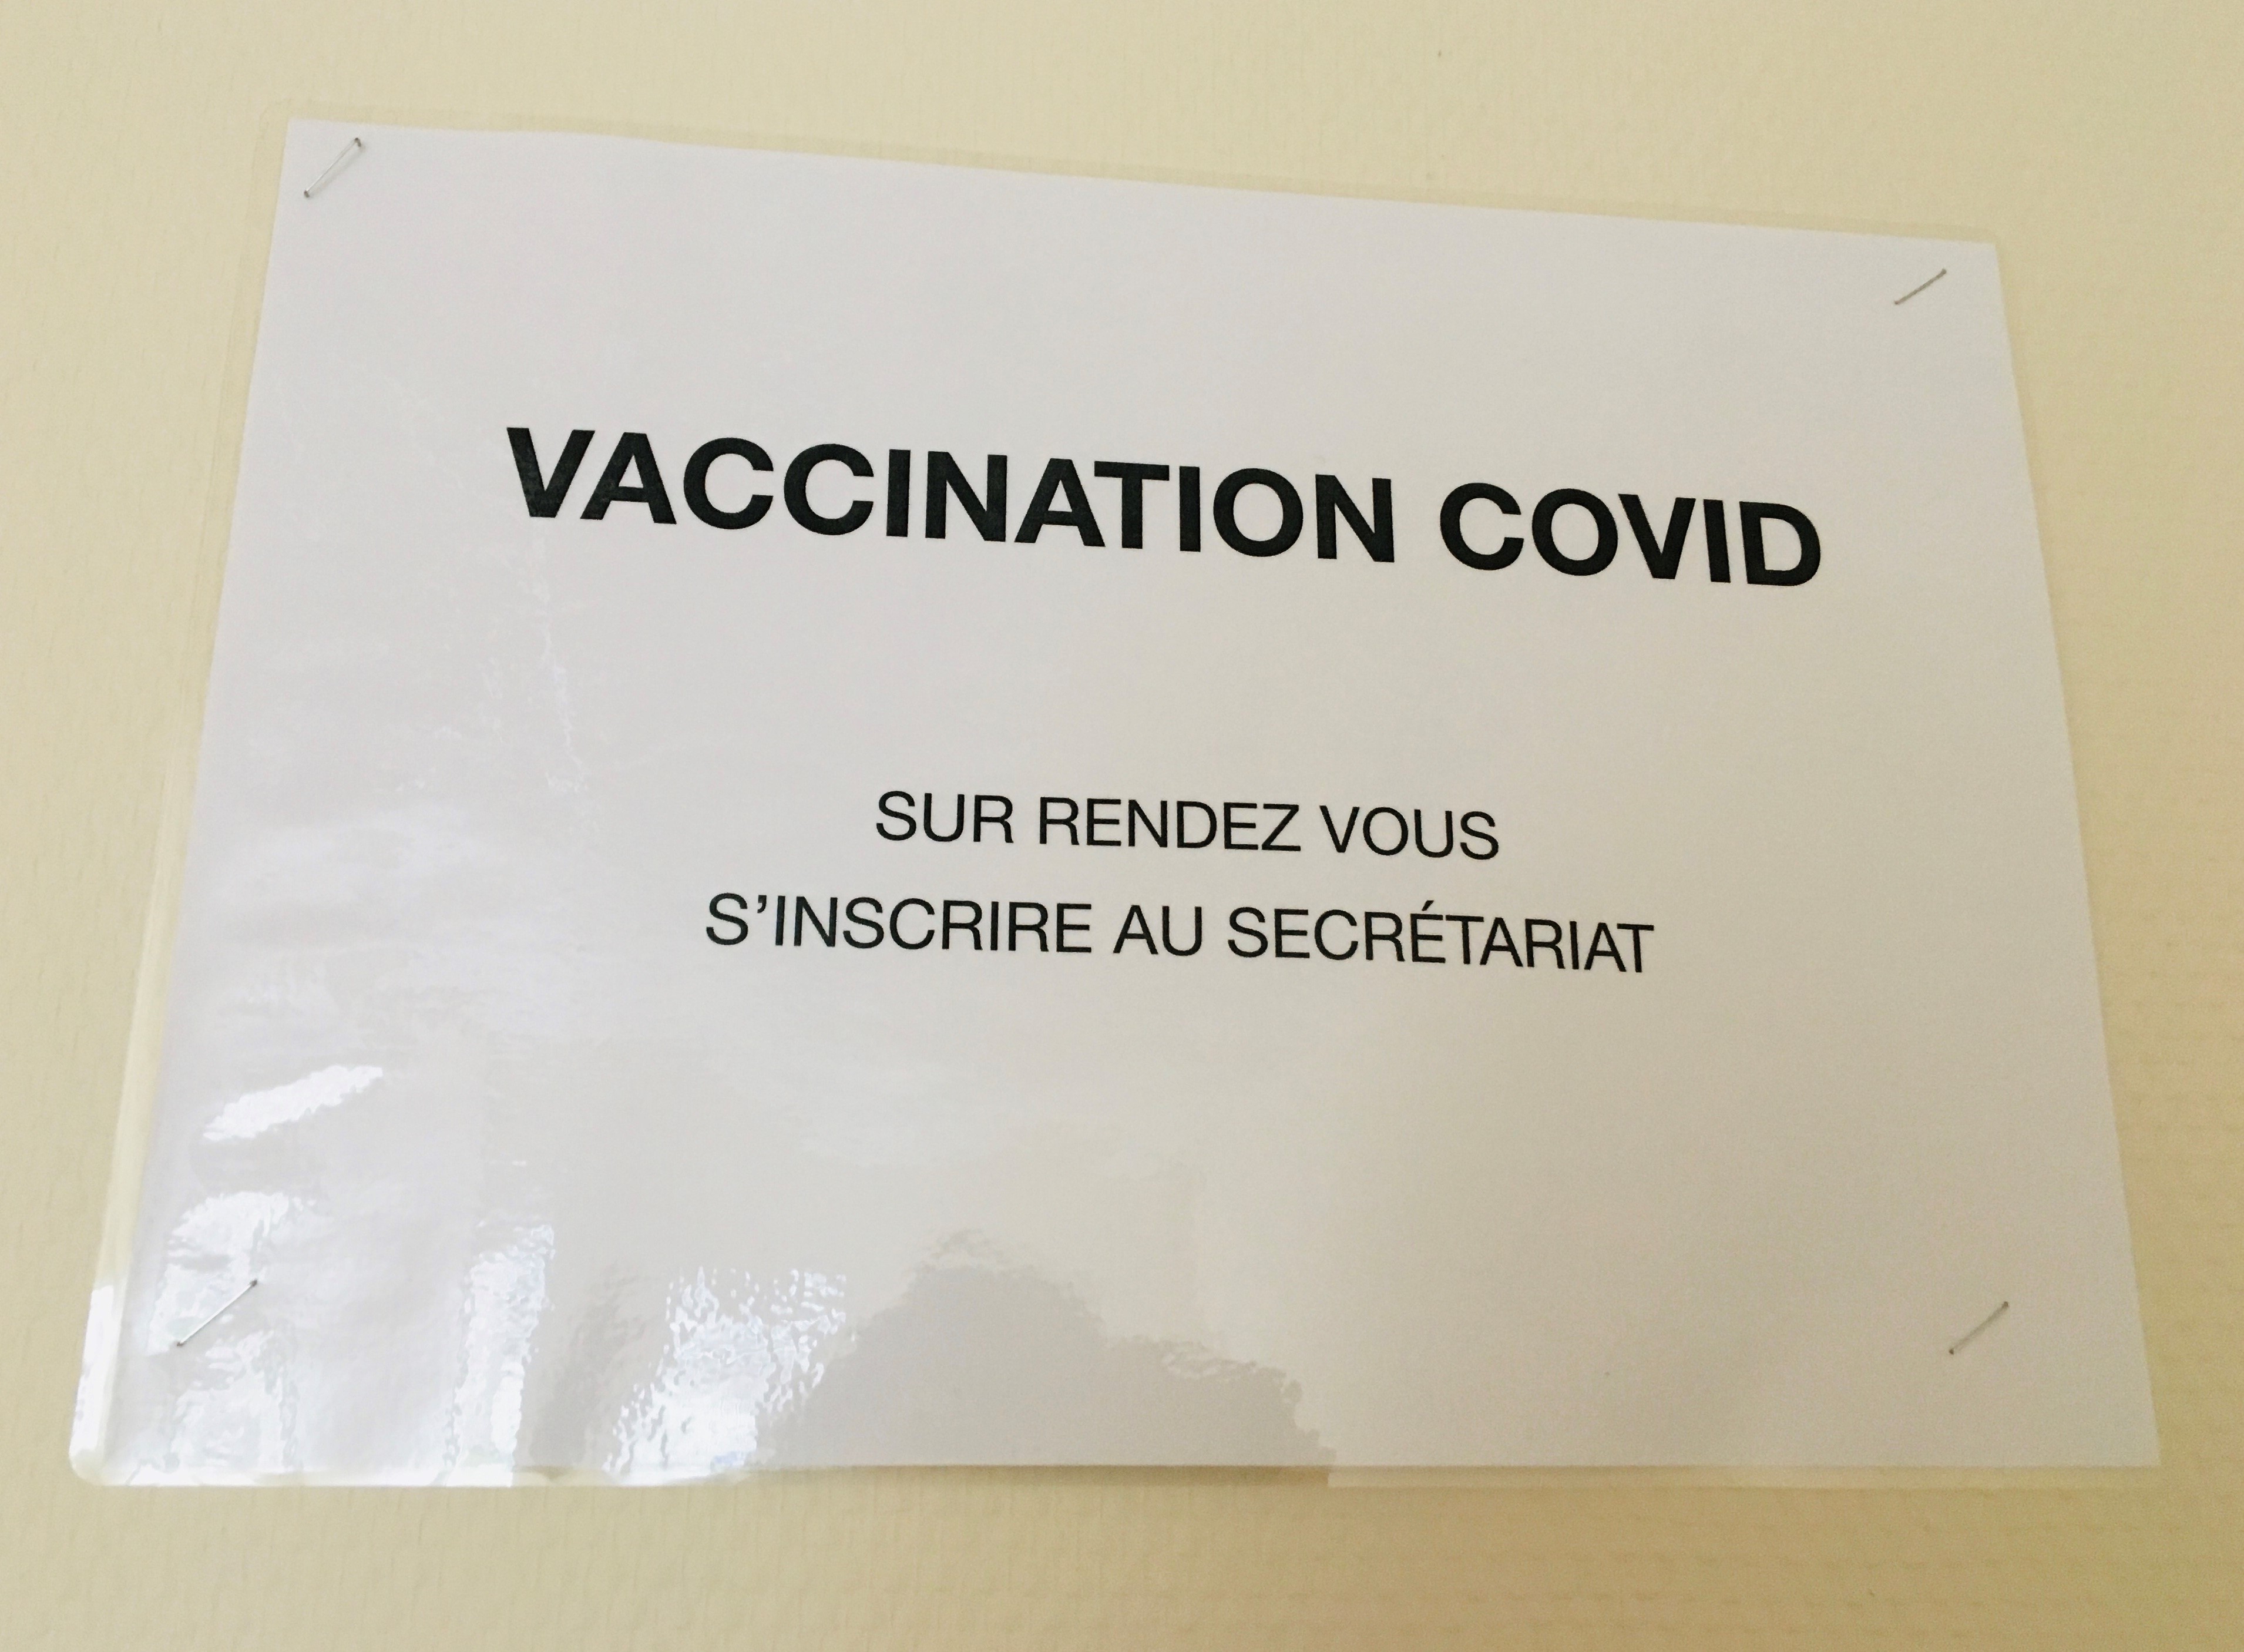 vaccination-covid.jpg (1.16 MB)